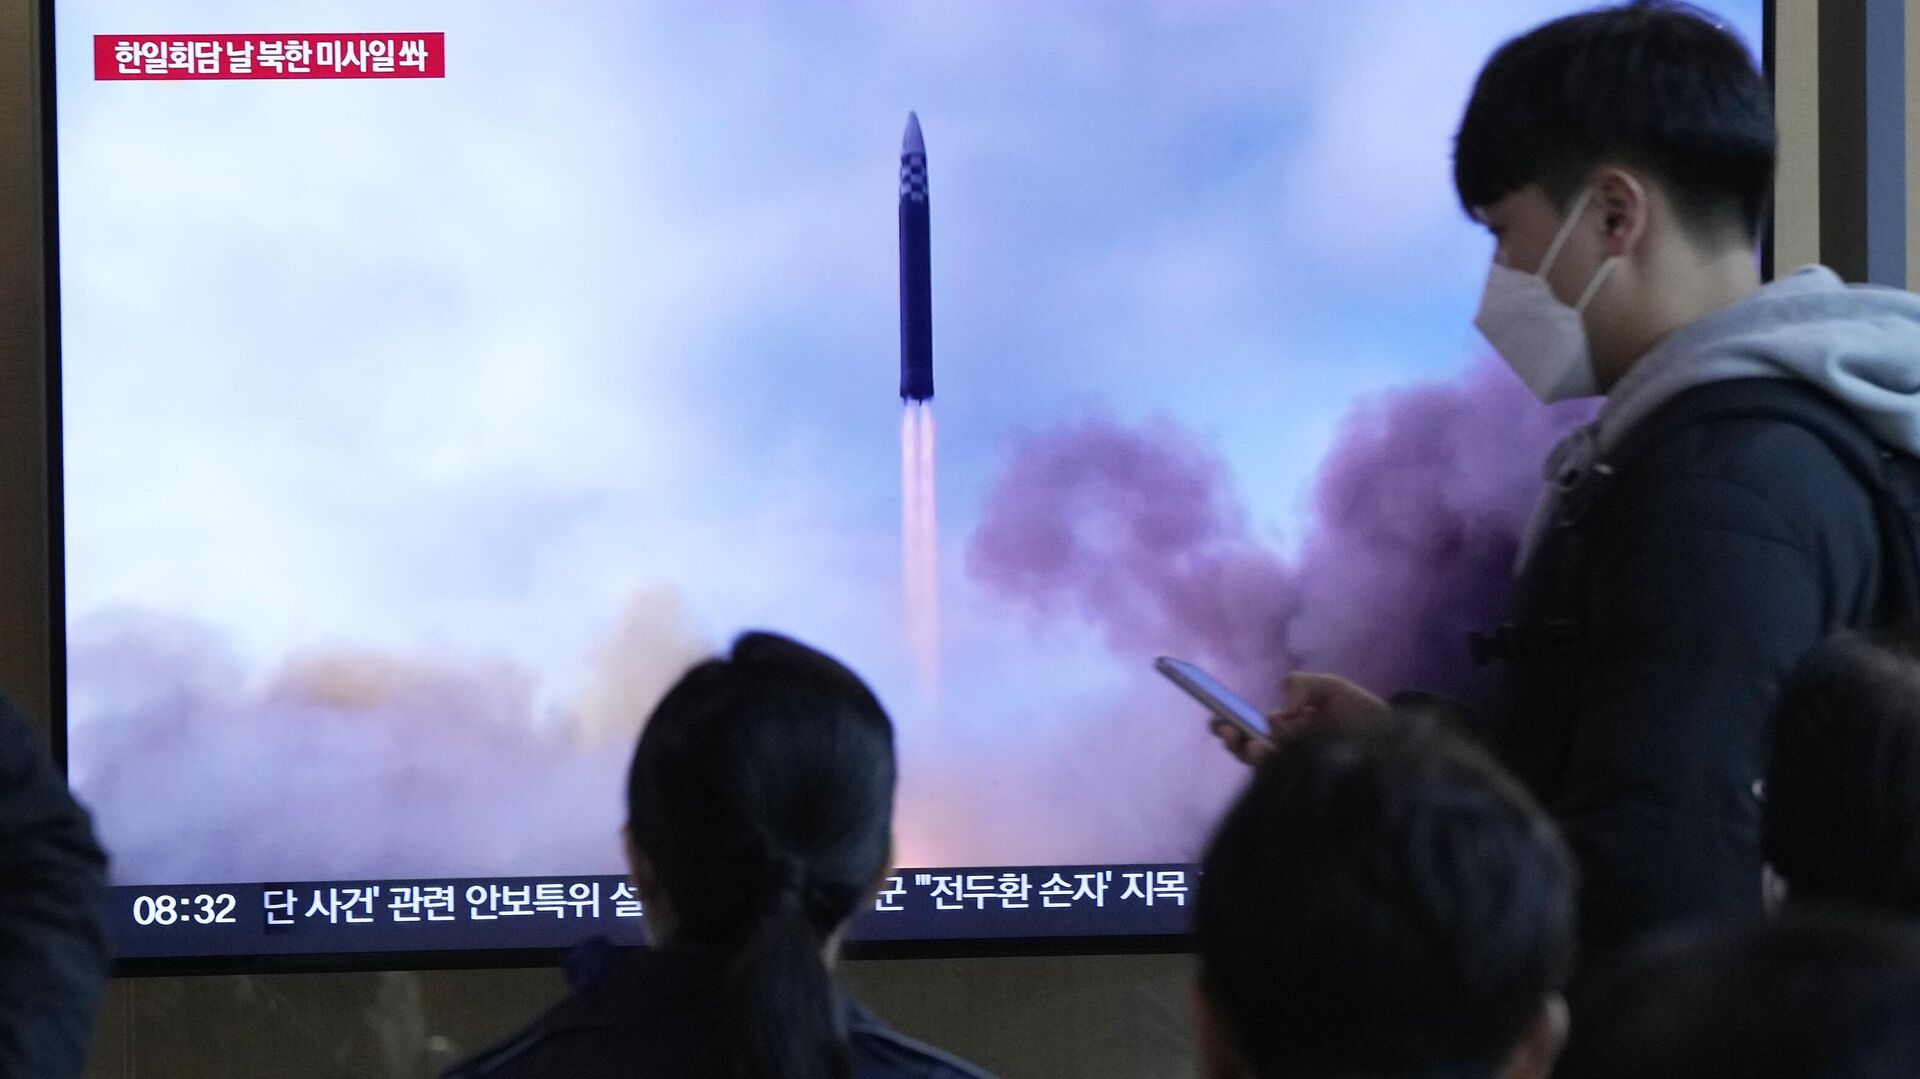 Corea del Norte confirma ensayo de misil balístico - Sputnik Mundo, 1920, 17.03.2023